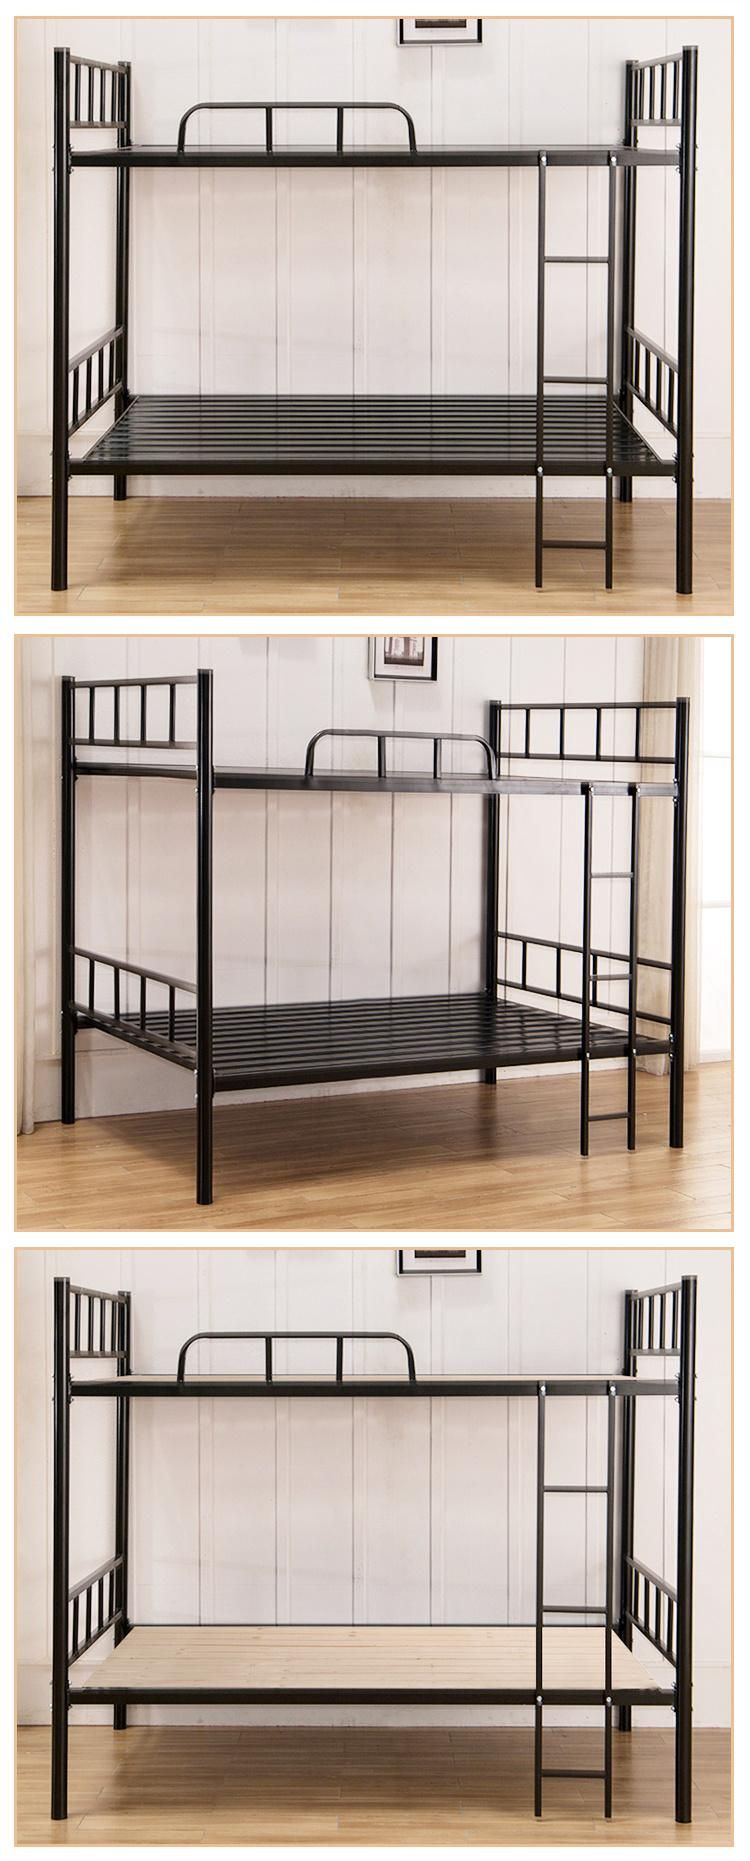 2022 Cheap Double Metal Frame Bed School Dorm Wooden Bunk Bed